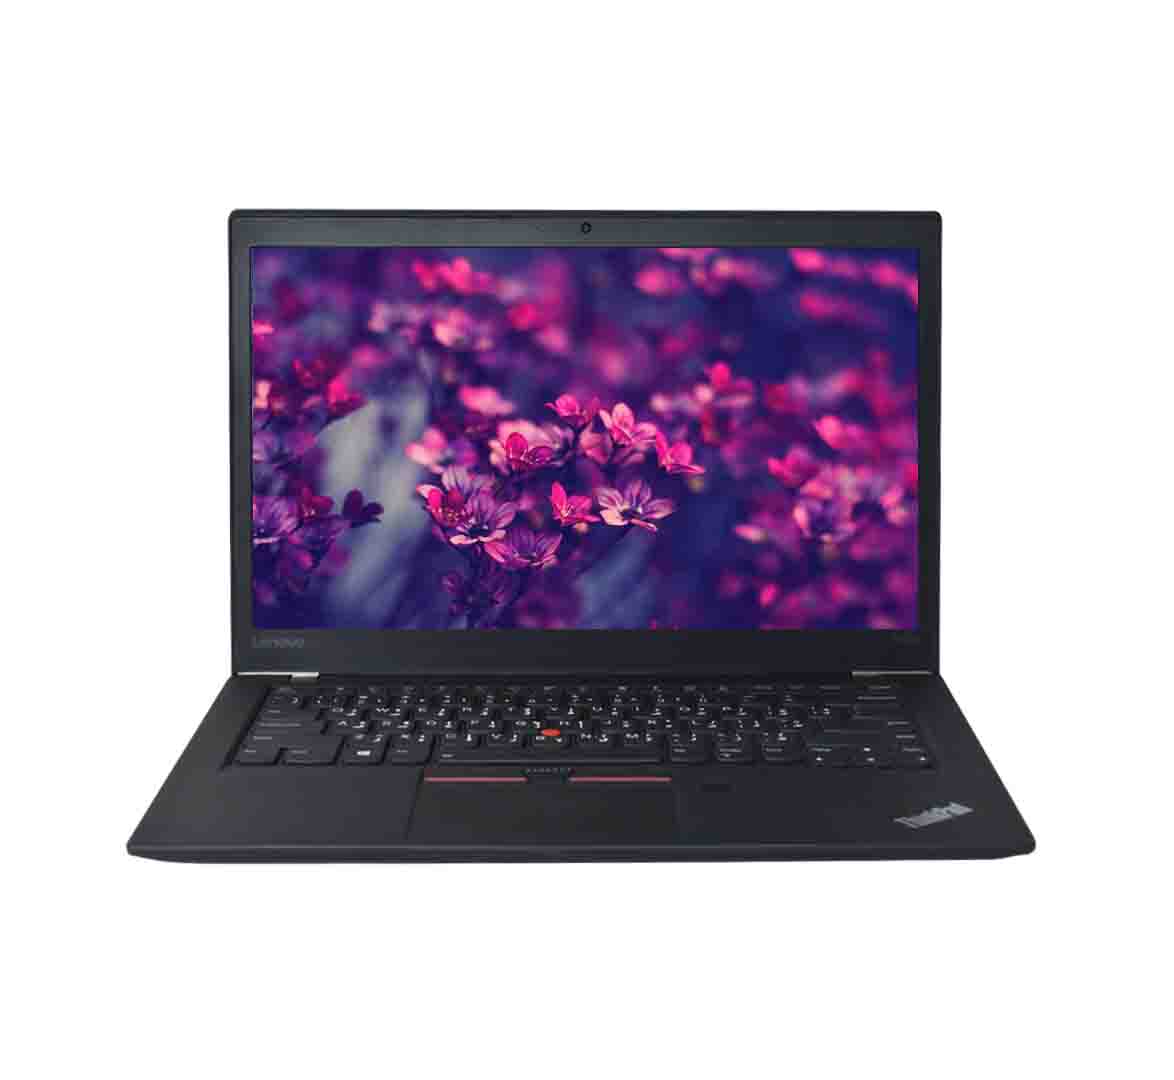 Lenovo ThinkPad T470s W10DG Business Laptop, Intel Core i7-6th Gen. CPU, 8GB RAM, 256GB SSD, 14 inch Touchscreen, Windows 10, Refurbished Laptop